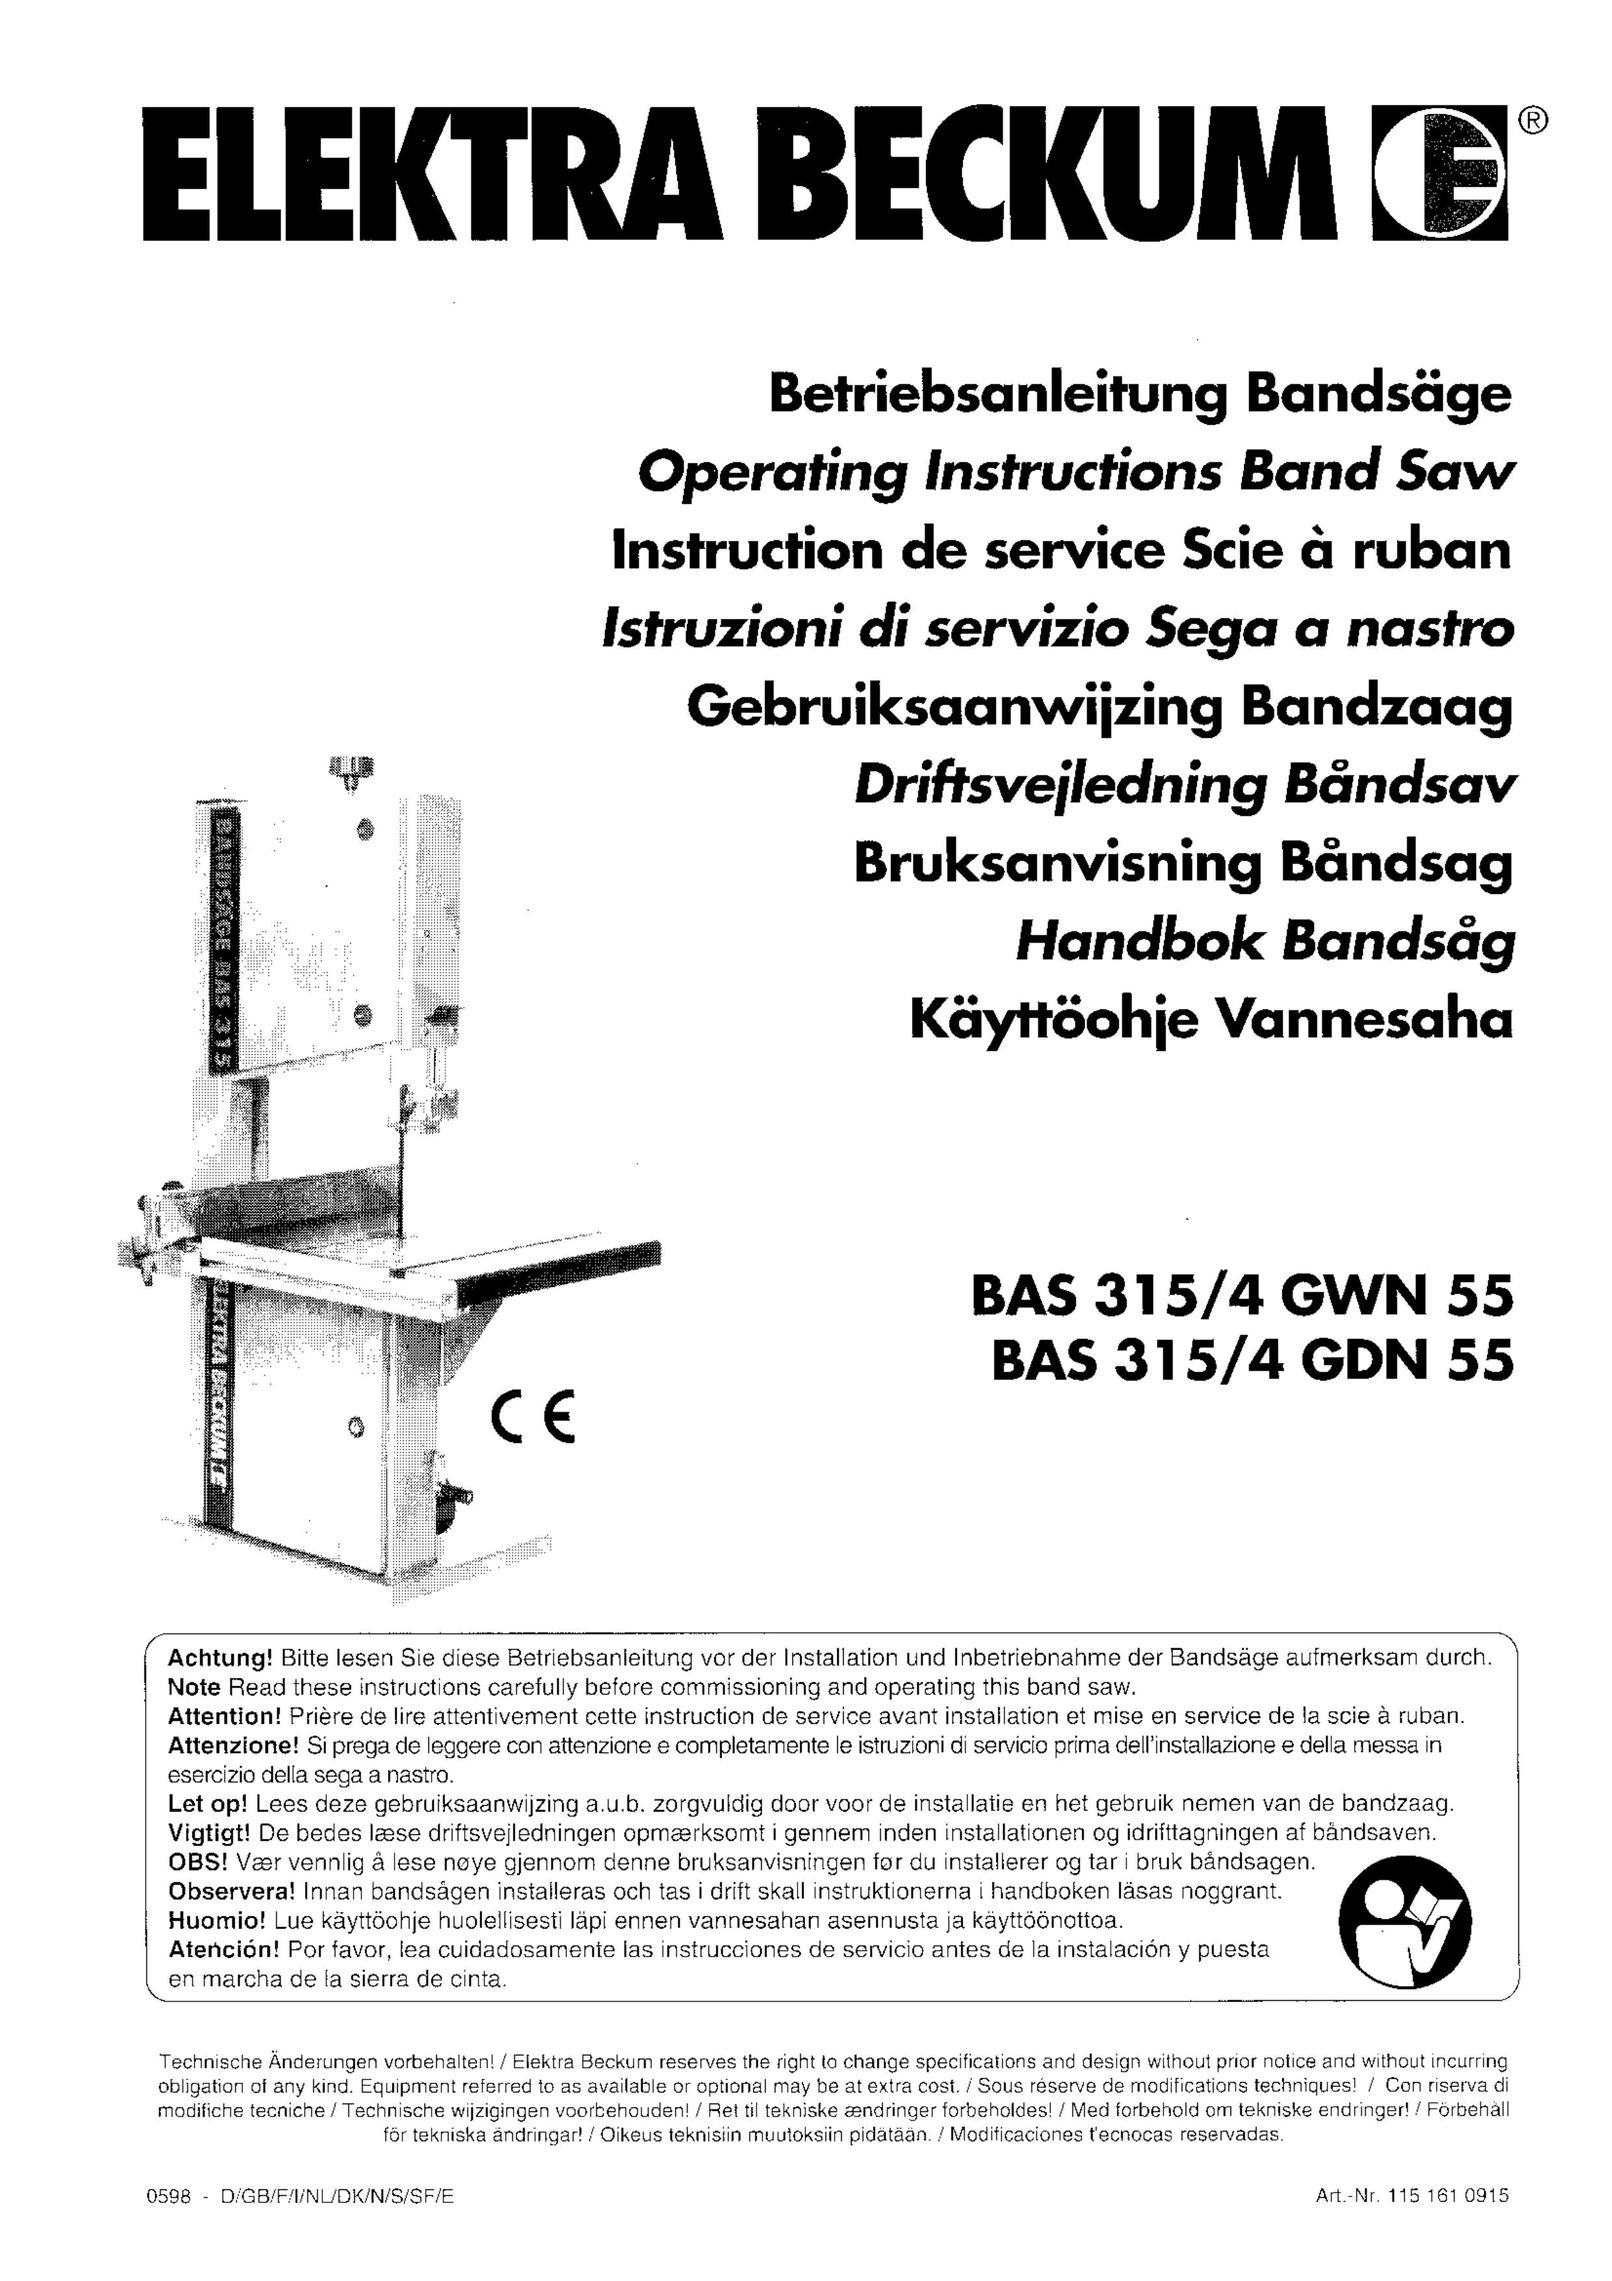 Metabo BAS 315/4 GDN 55 Saw User Manual